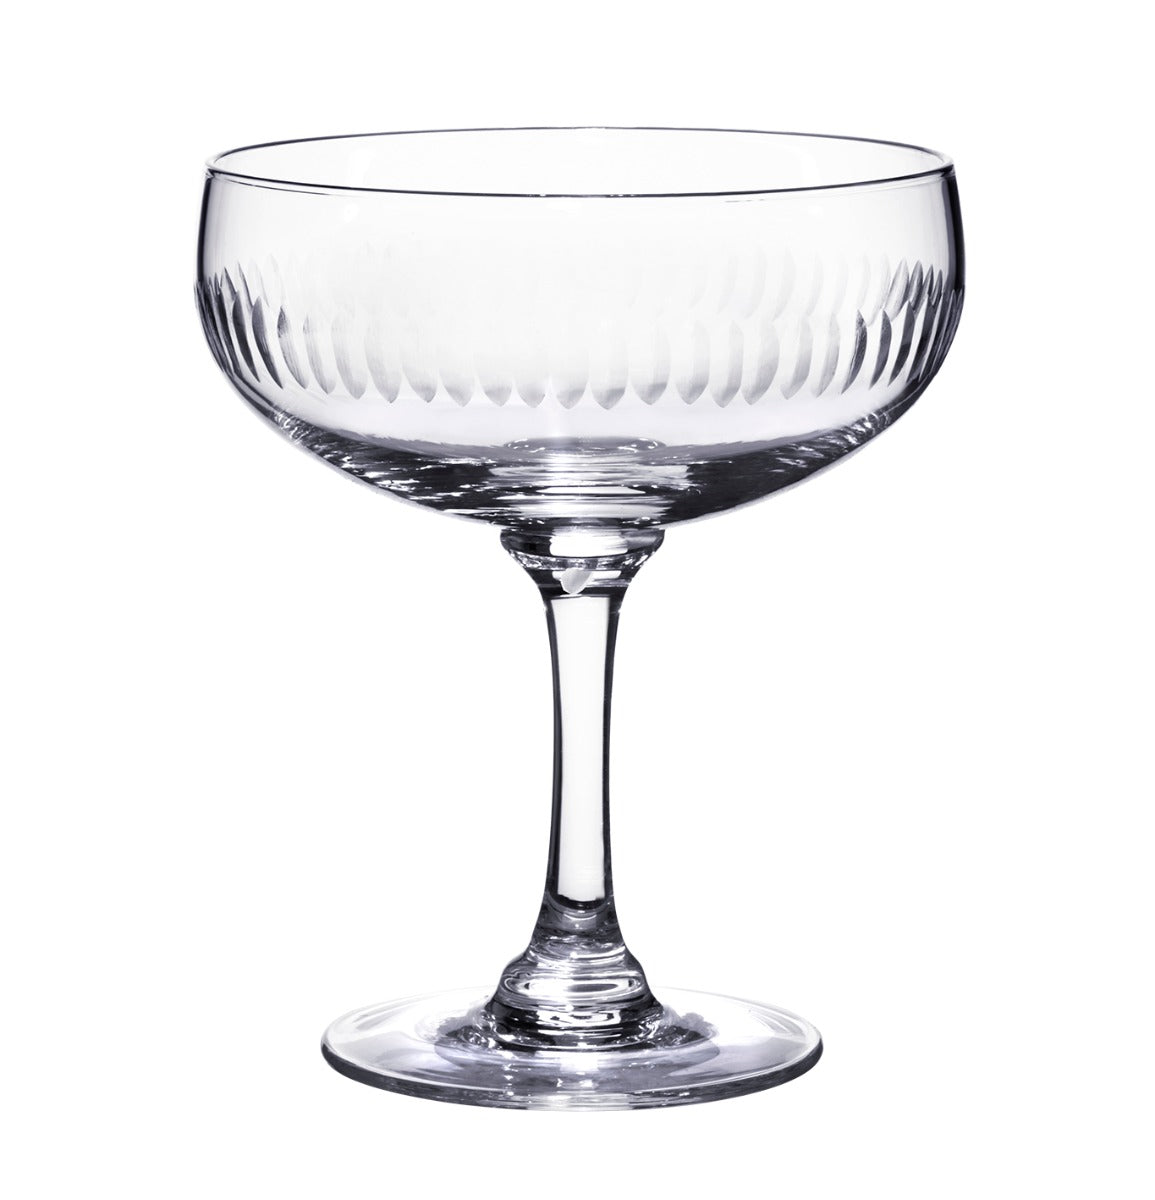 The vintage list Crystal Cocktail Glass